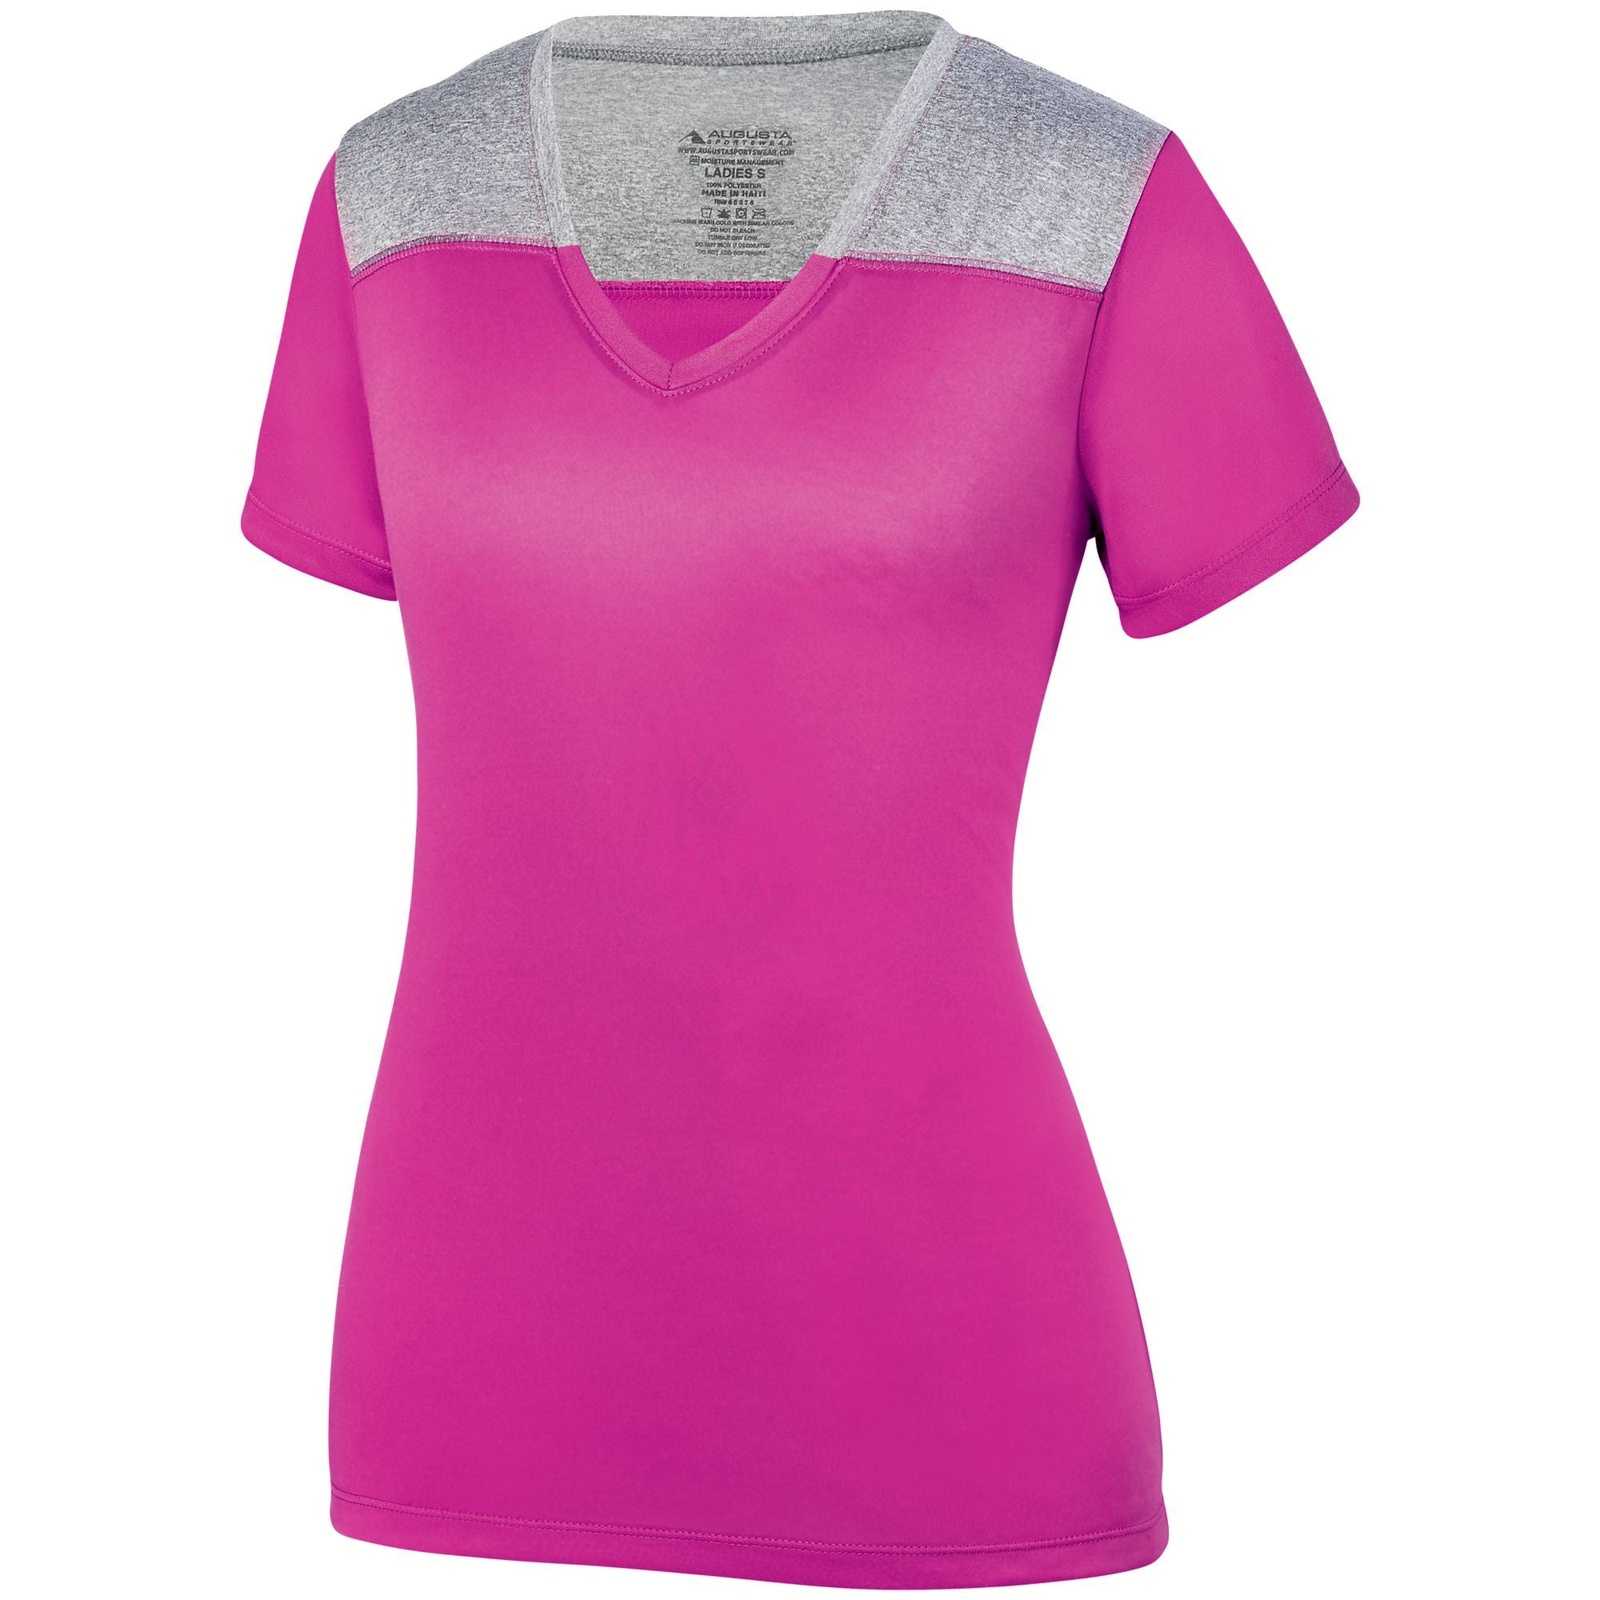 Augusta 3057 Ladies Challenge T-Shirt - Power Pink Graphite Heather - HIT a Double